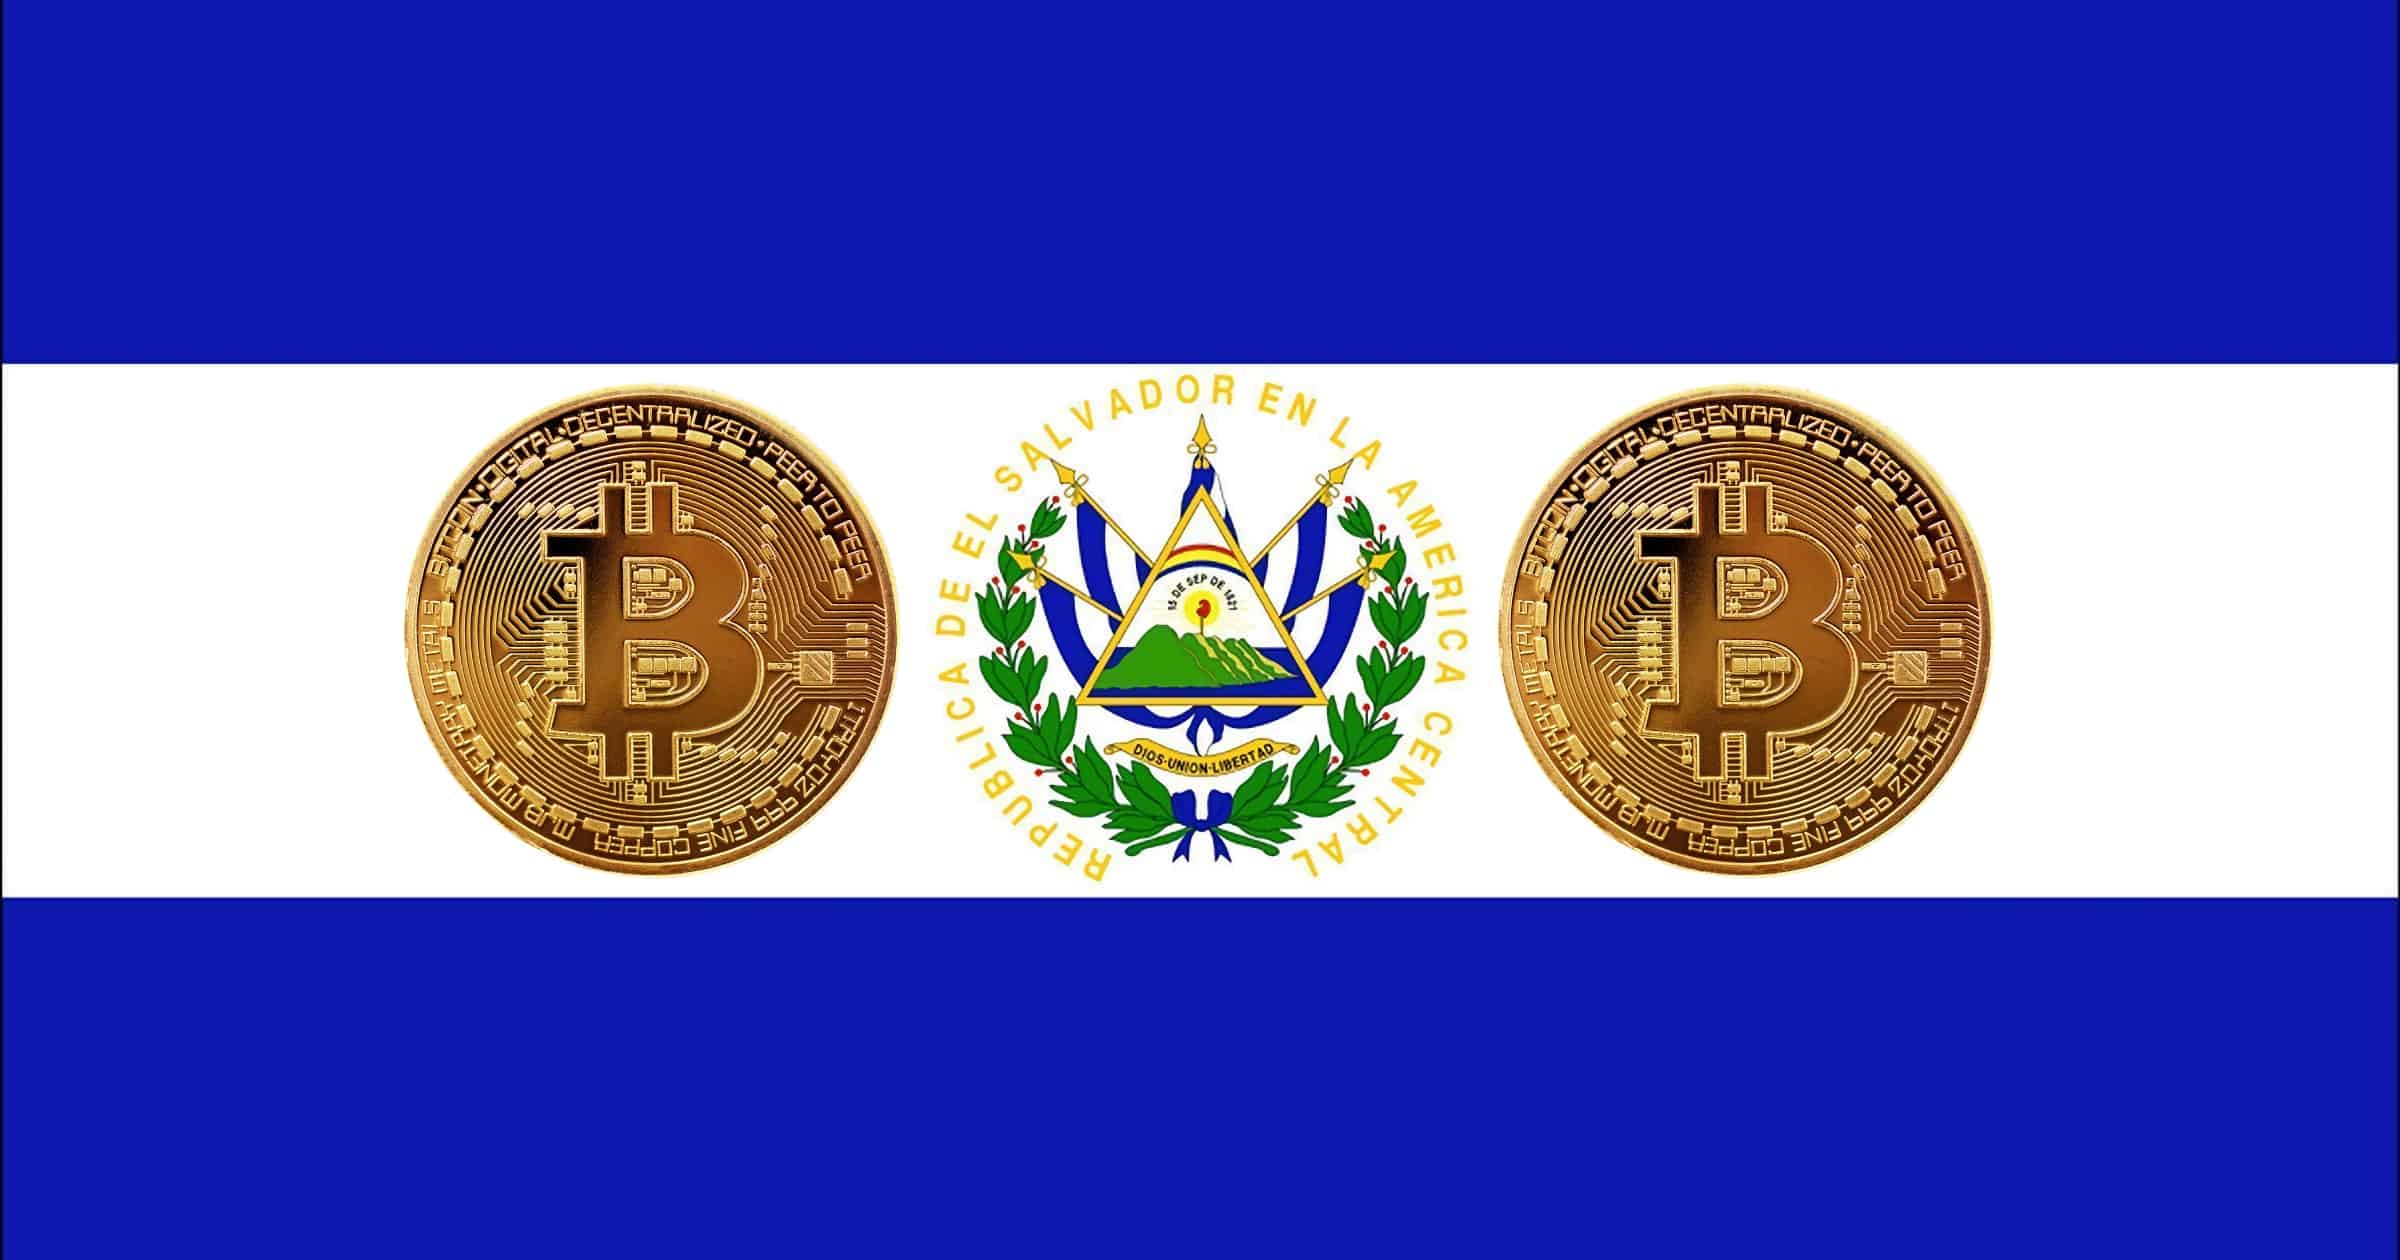 Bitcoin Becomes Legal Tender in El Salvador Today